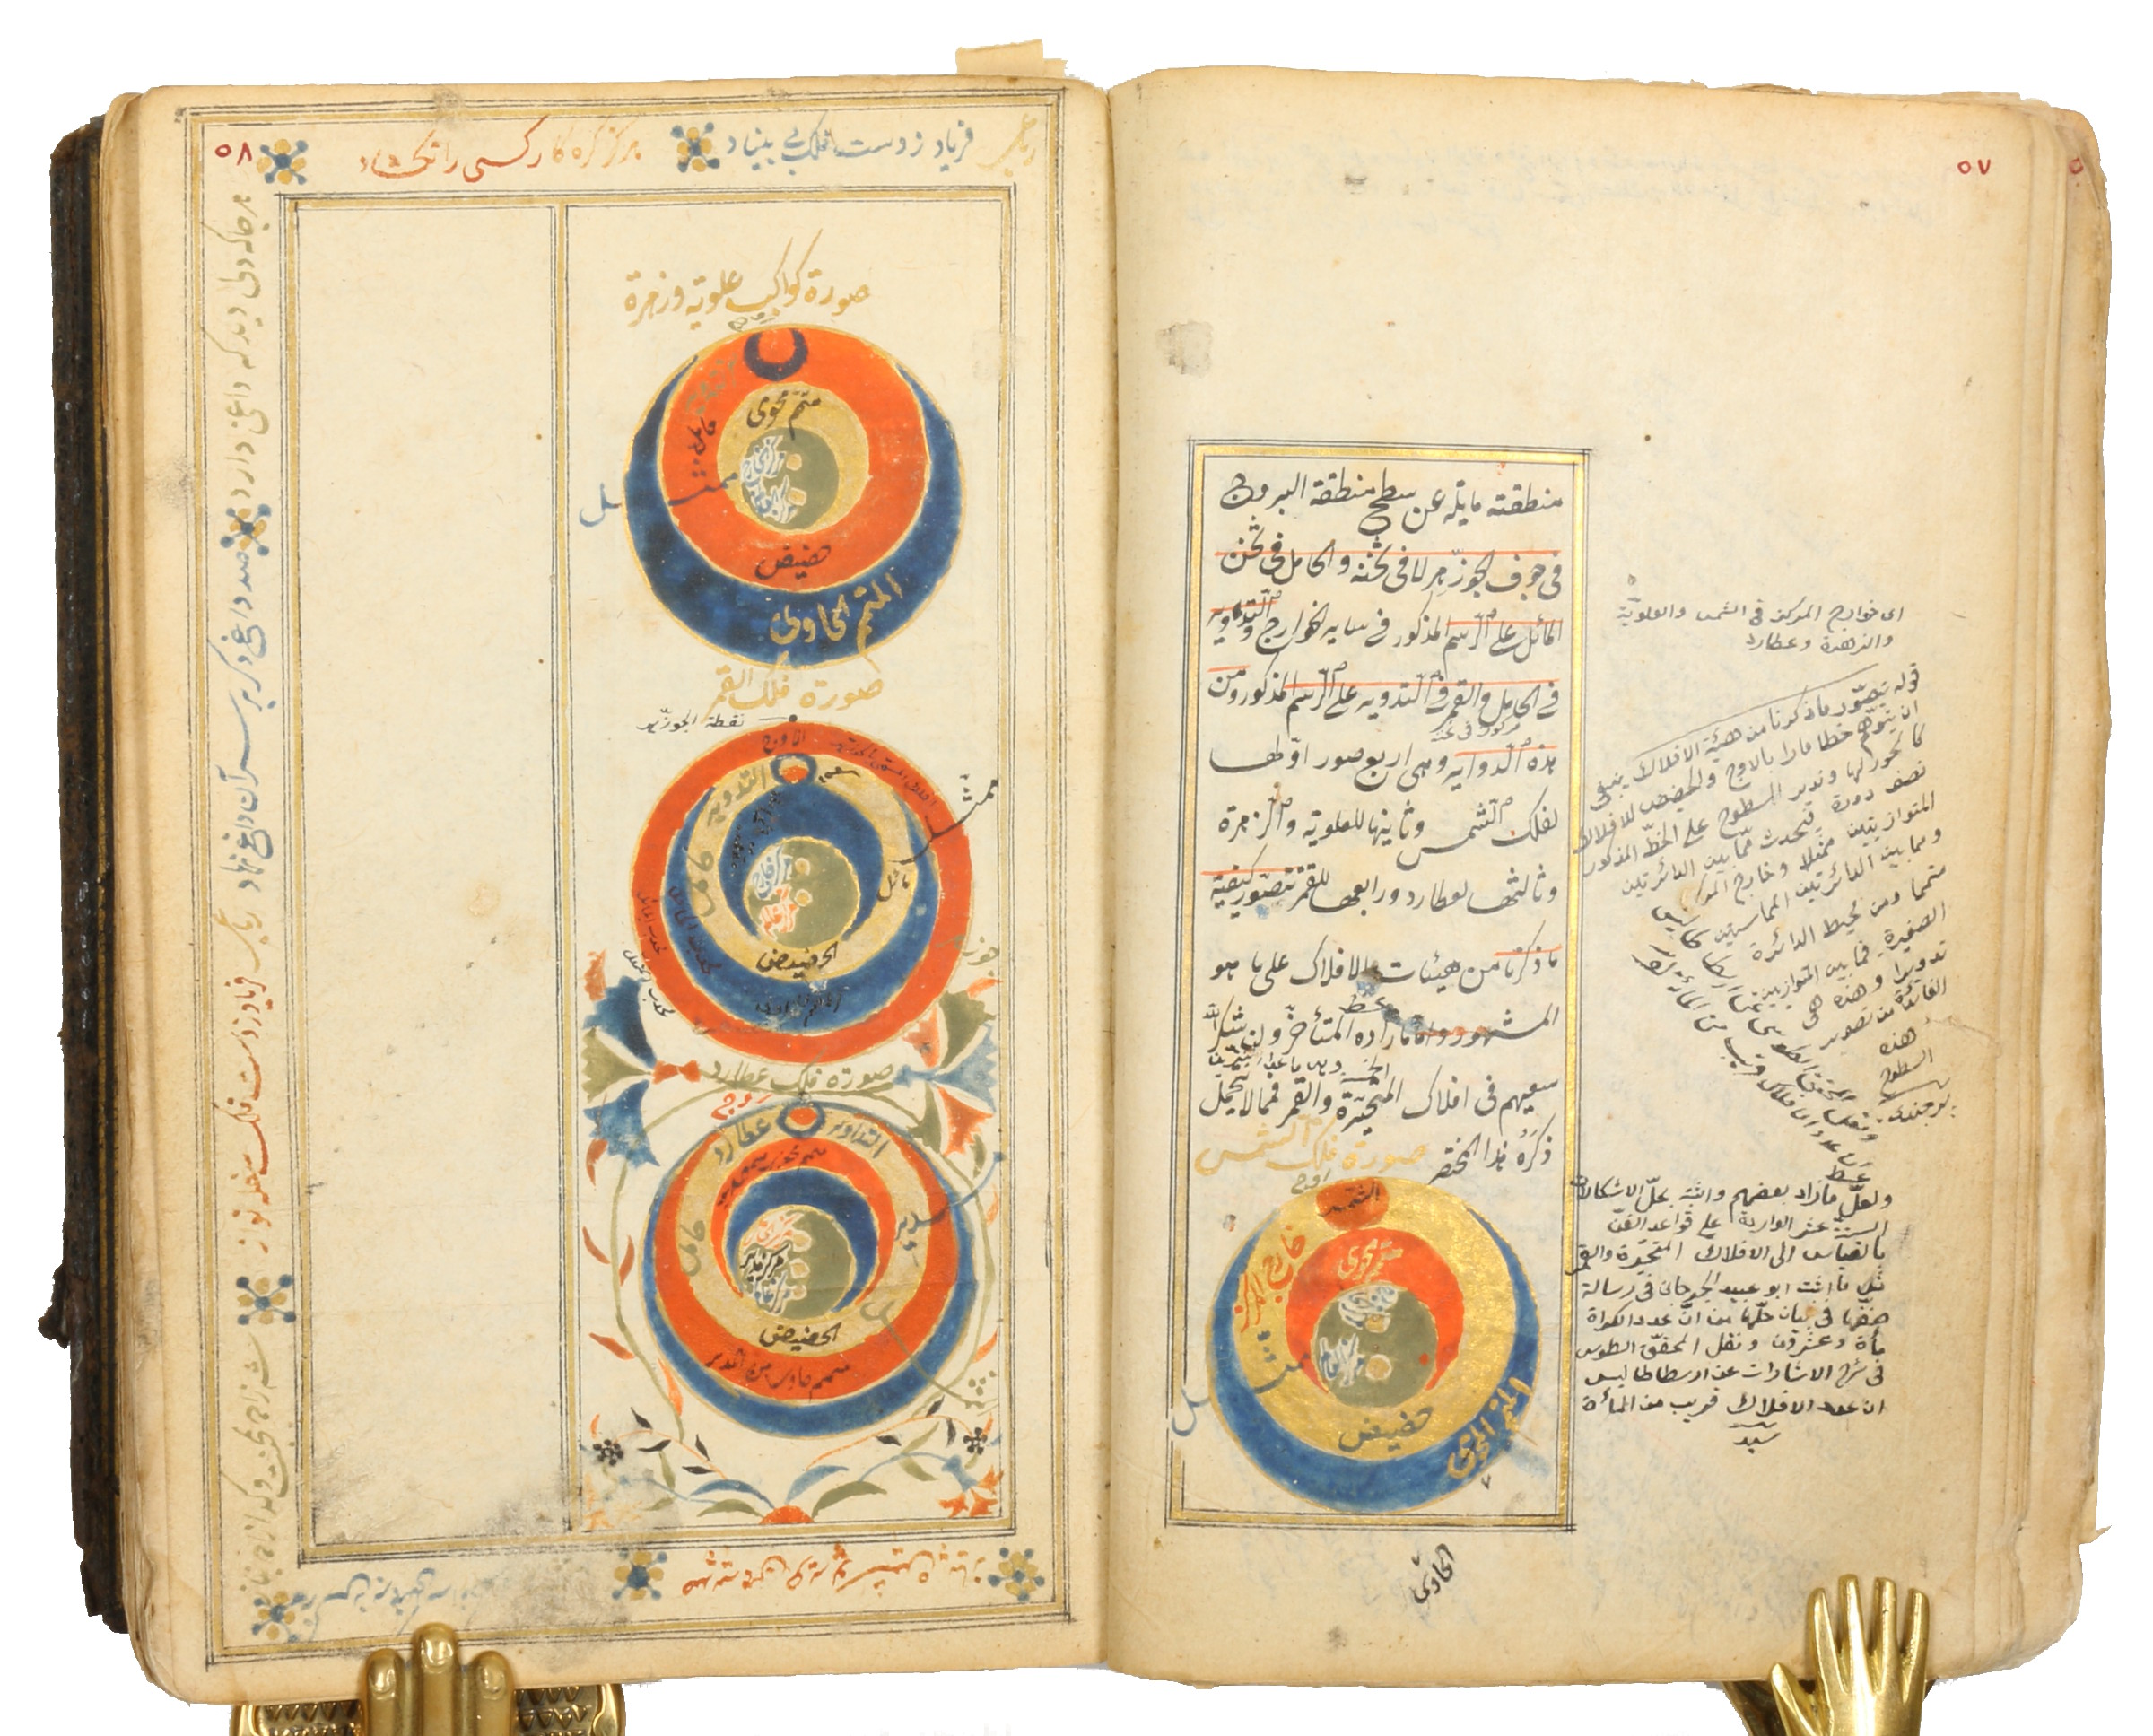 Sharh al-mulakhas fi al-hay'a [Commentary on the Summary of Astronomy]. by Jaghmini al-Khwarizmi, Mahmud bin Muhammad bin Omar al- / Qadizade al-Rumi, Musa ibn Muhammad.: (1684) | Antiquariat INLIBRIS Gilhofer Nfg. GmbH